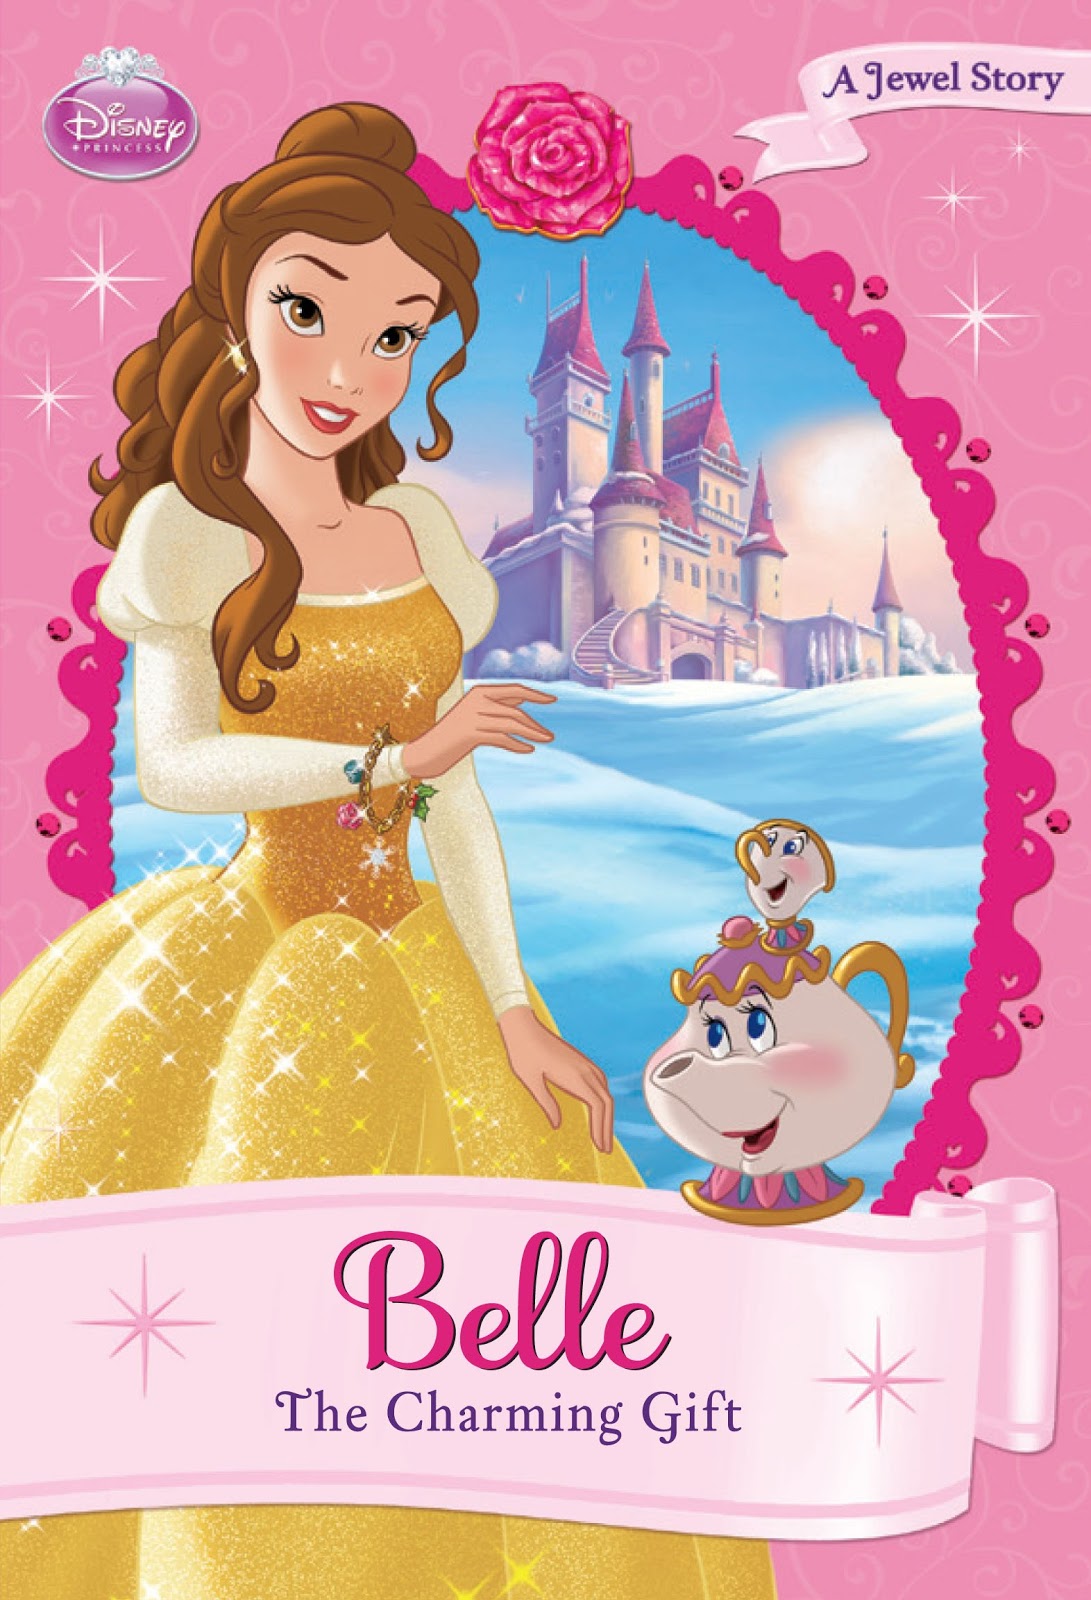 Belle The Charming Gift   Disney Princess Photo  33116257    Fanpop